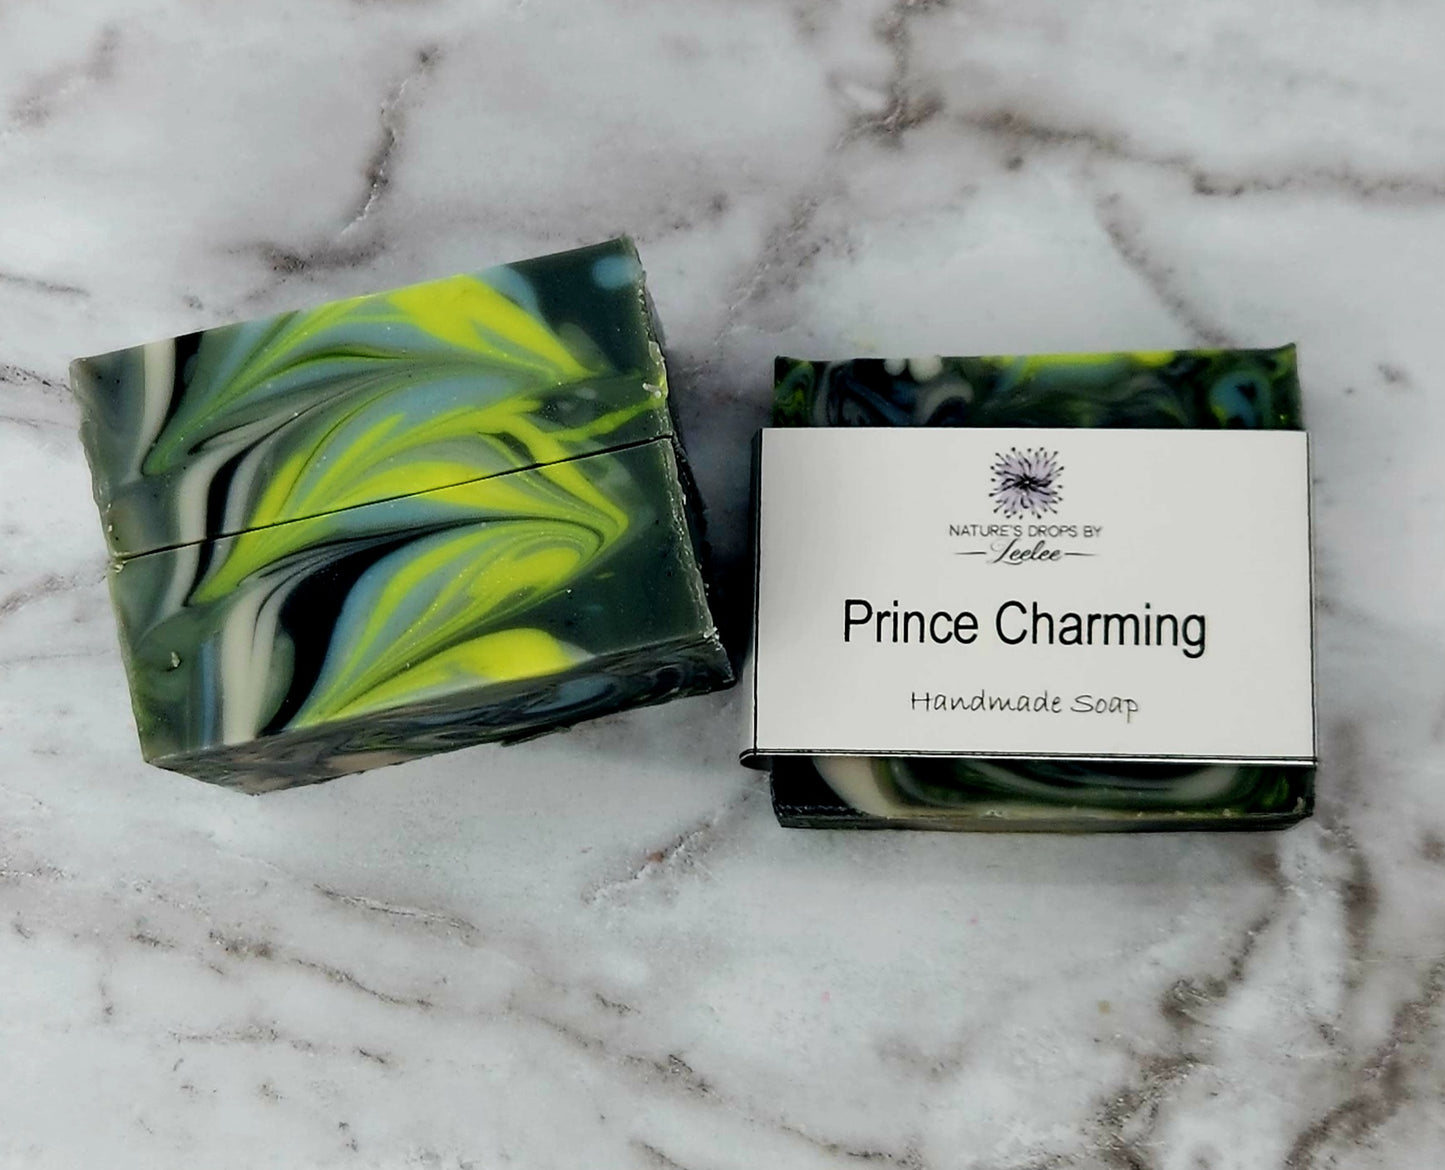 Prince Charming Bar Soap